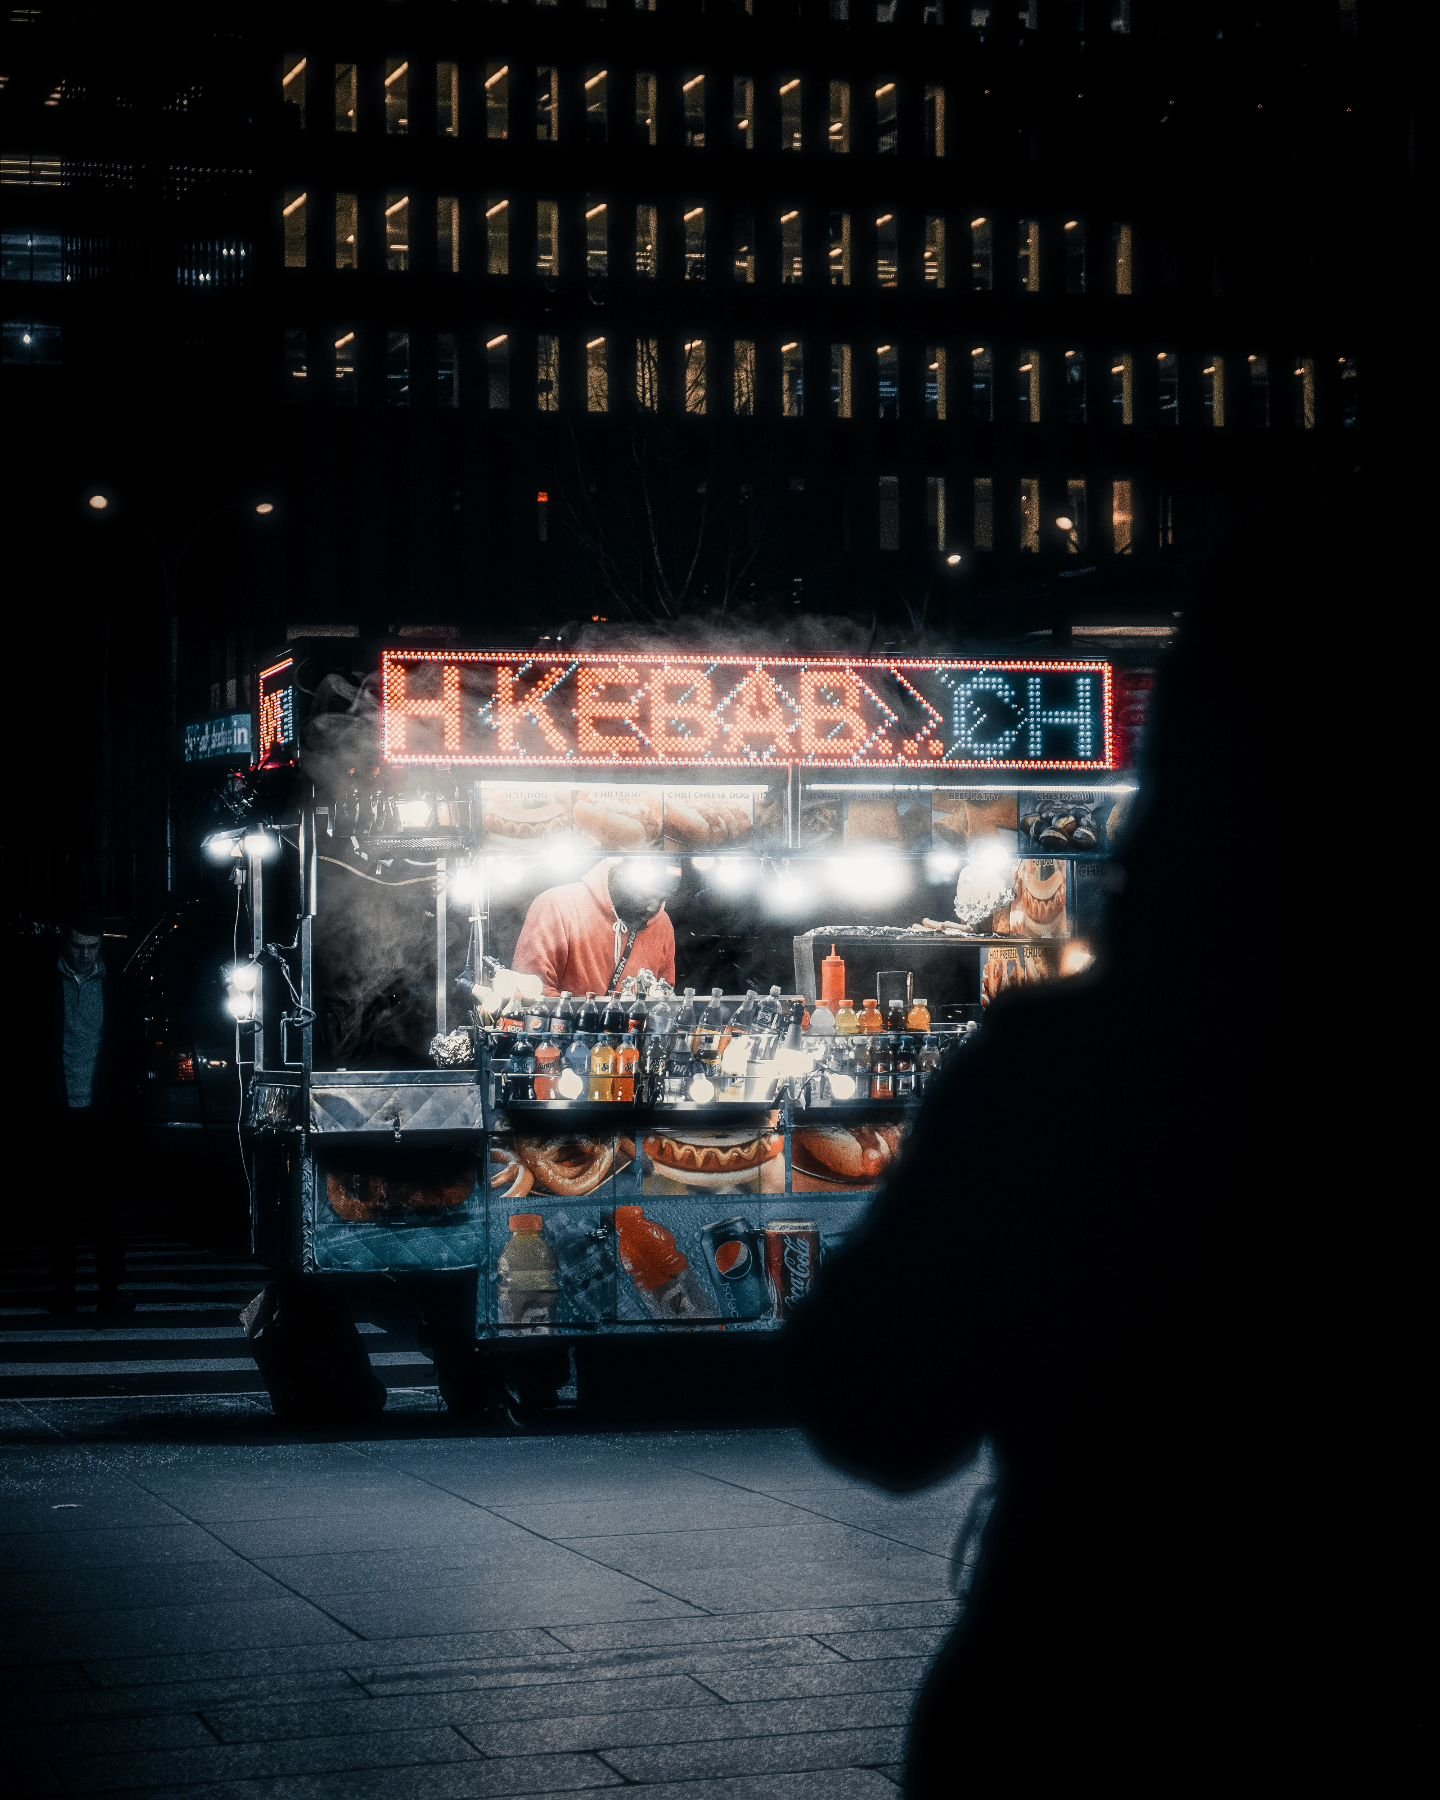 Late night snack

#streetphotography #nightshooters #streetleaks #cinegrams #spicollective #streetgrammers #moments_in_streetlife #co10k #photocinematica #cinema_streets #street_minute #streetianity #fatalframes #sonyalpha #streetsshots #dof_addicts 